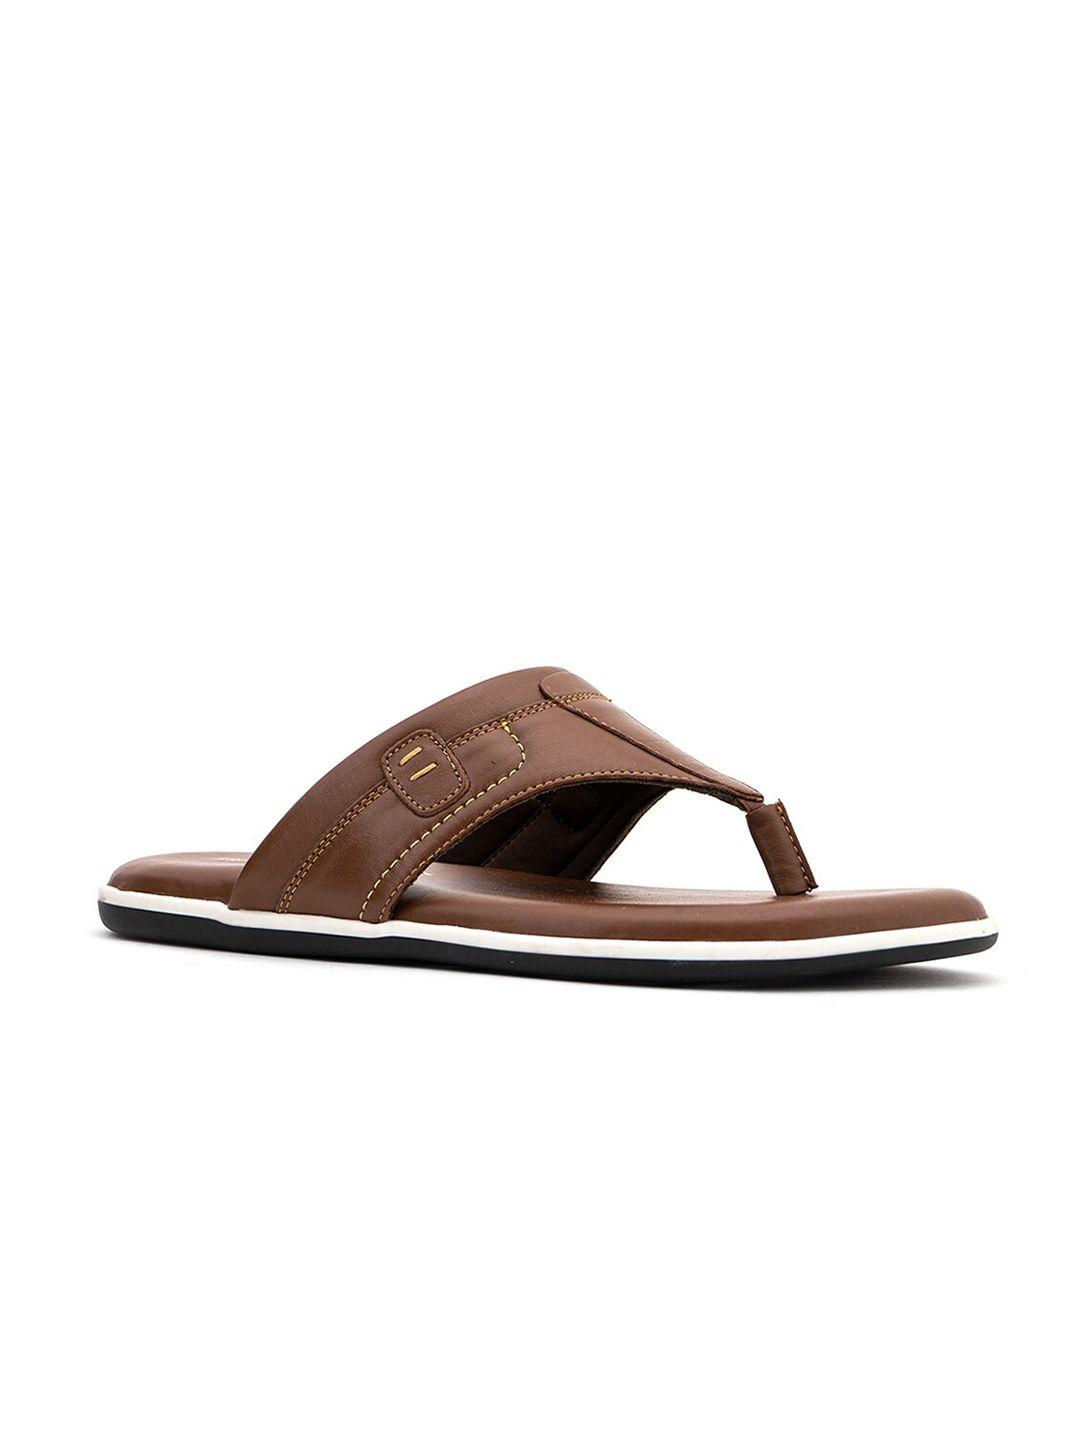 khadims-men-brown-leather-comfort-sandals